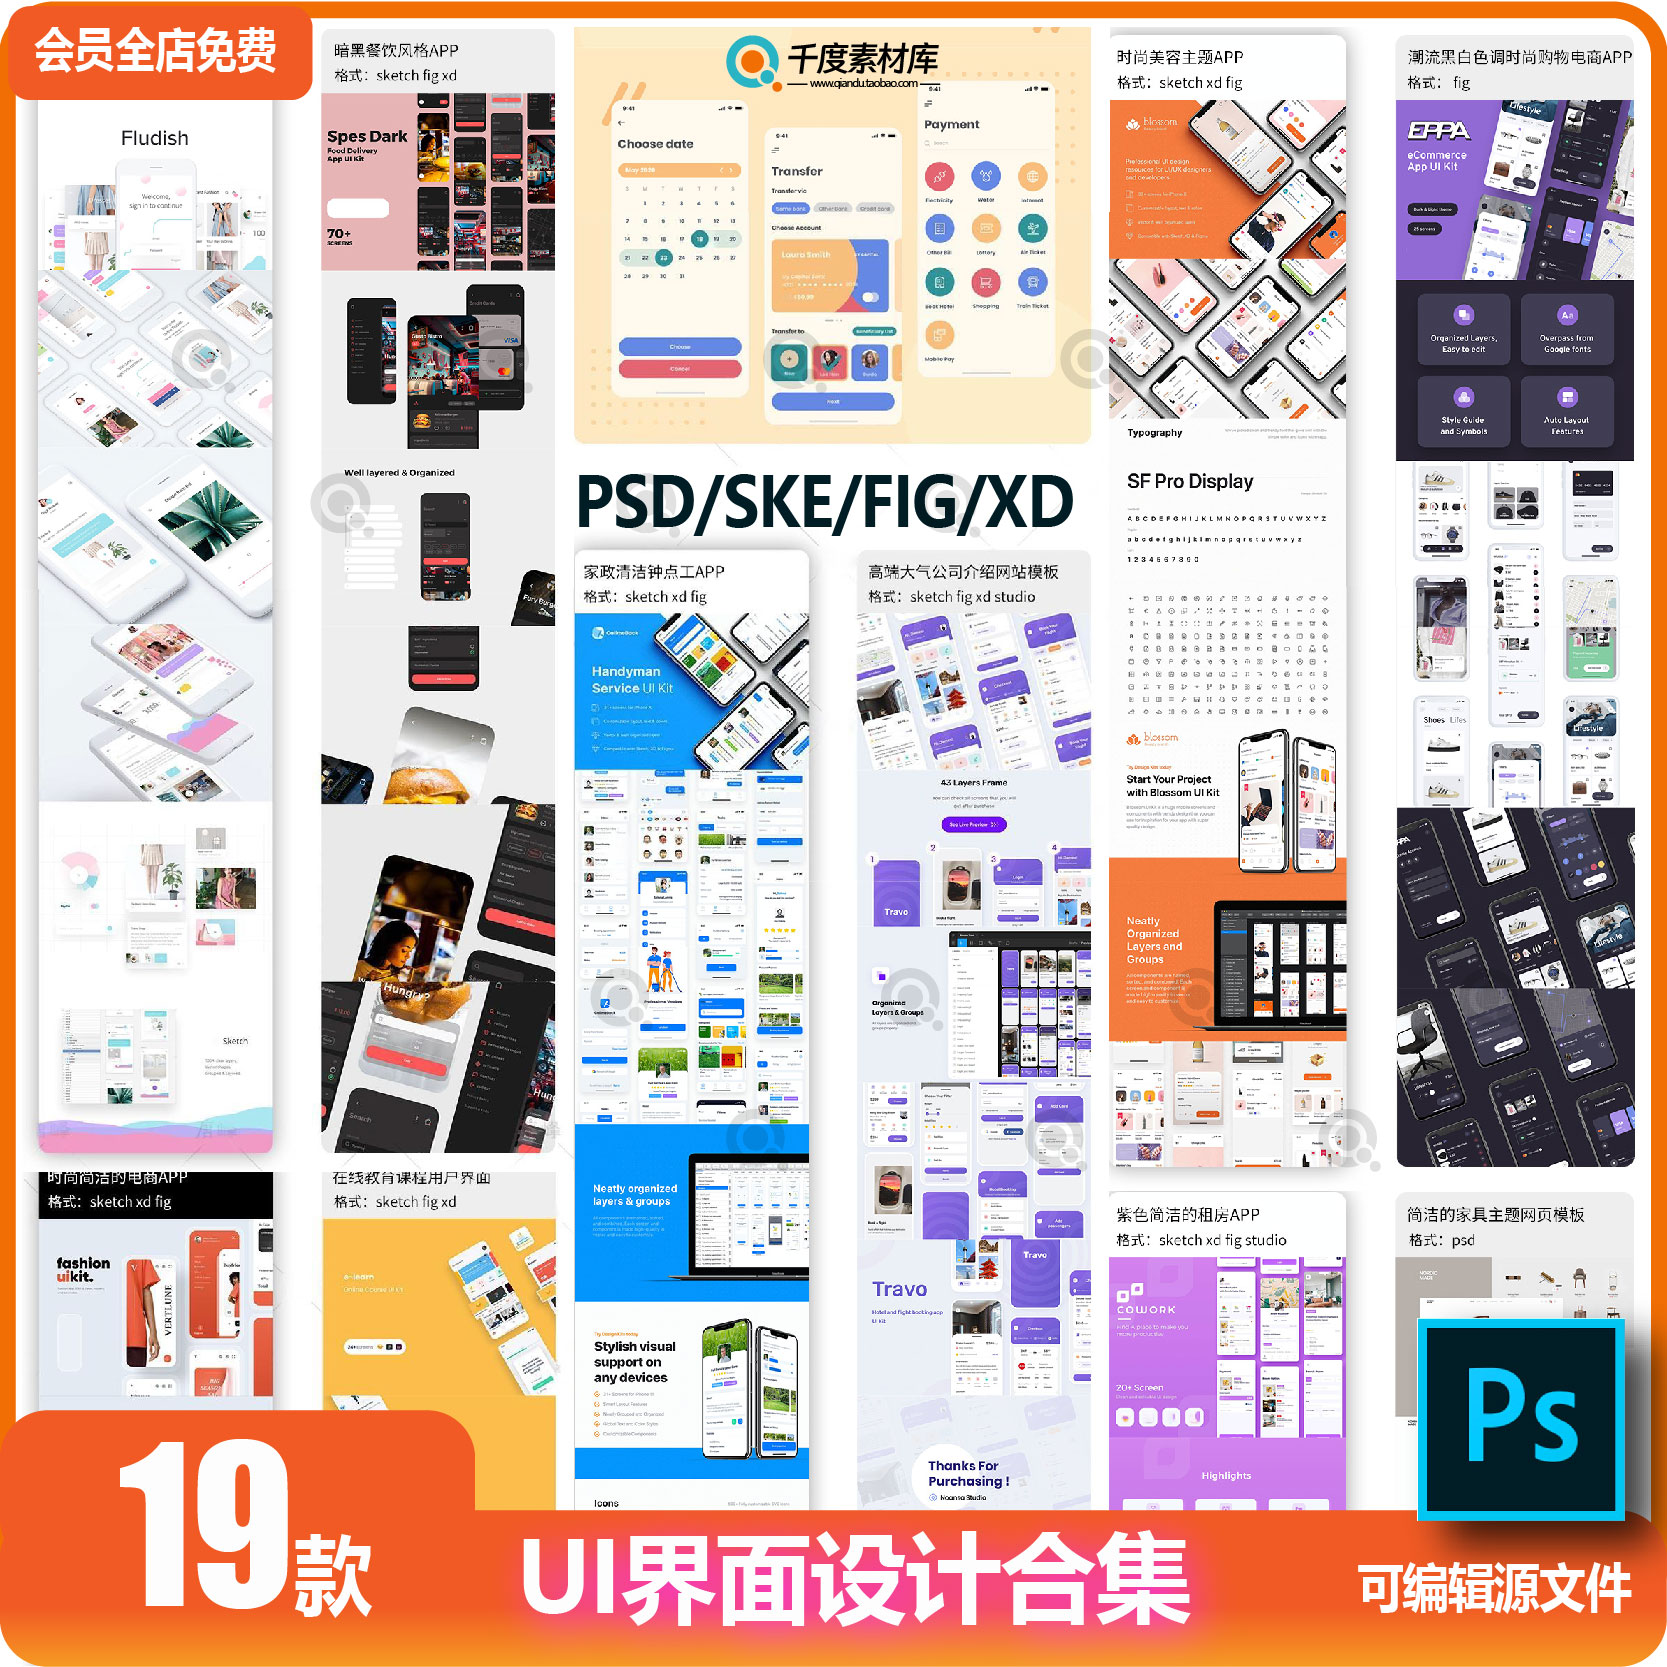 ui界面设计手机APP网站首页Sketch设计素材fig模板PSD素材作品集